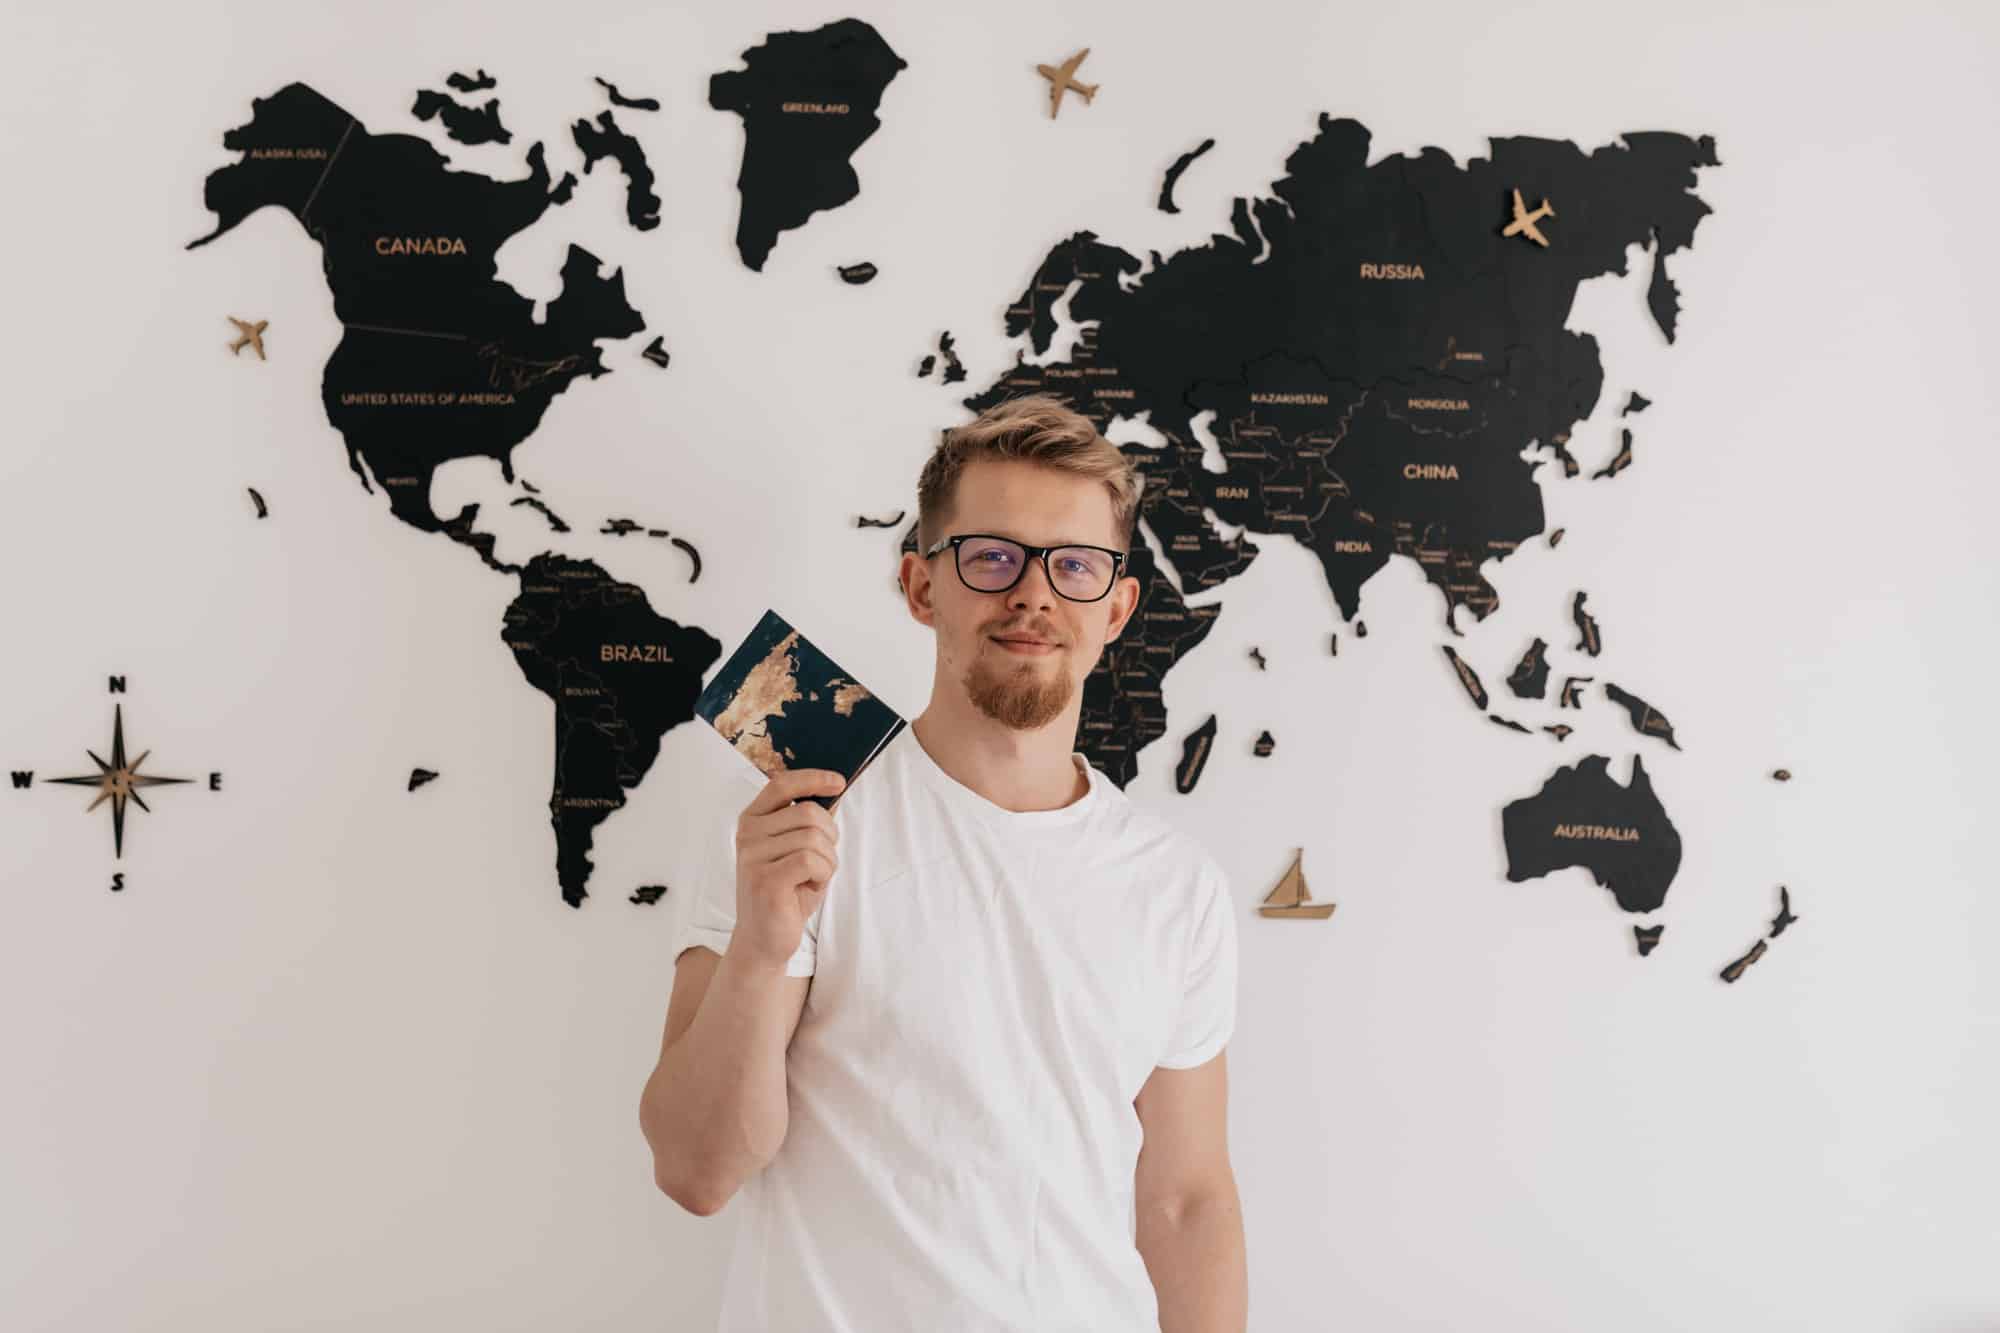 Stylish european man with passport posing at camera over world map.